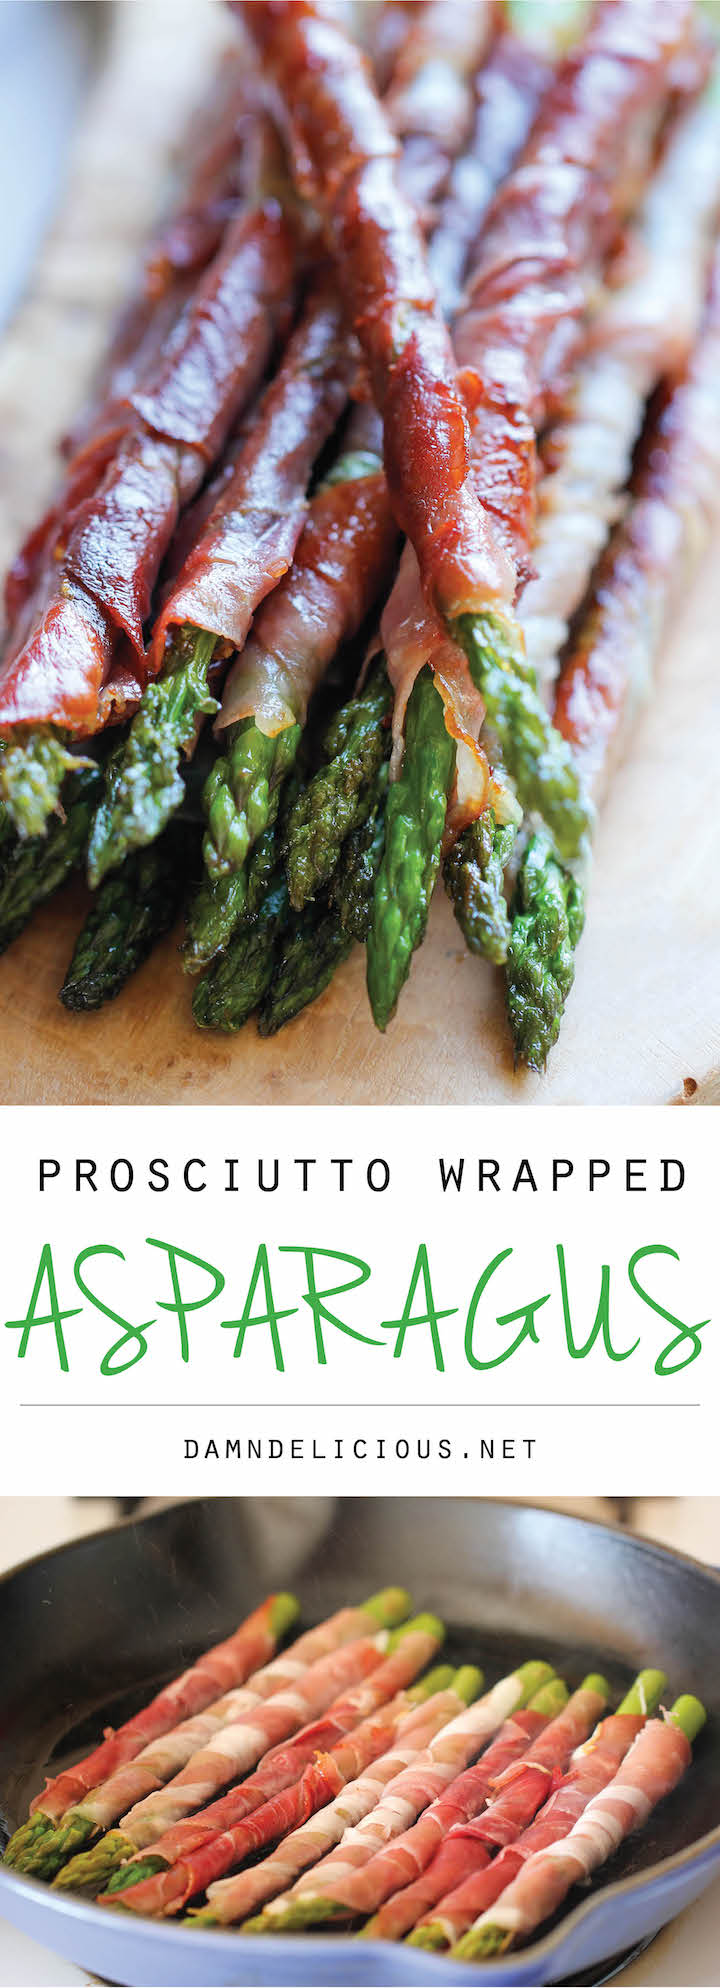 Easy-to-make prosciutto-wrapped asparagus recipe